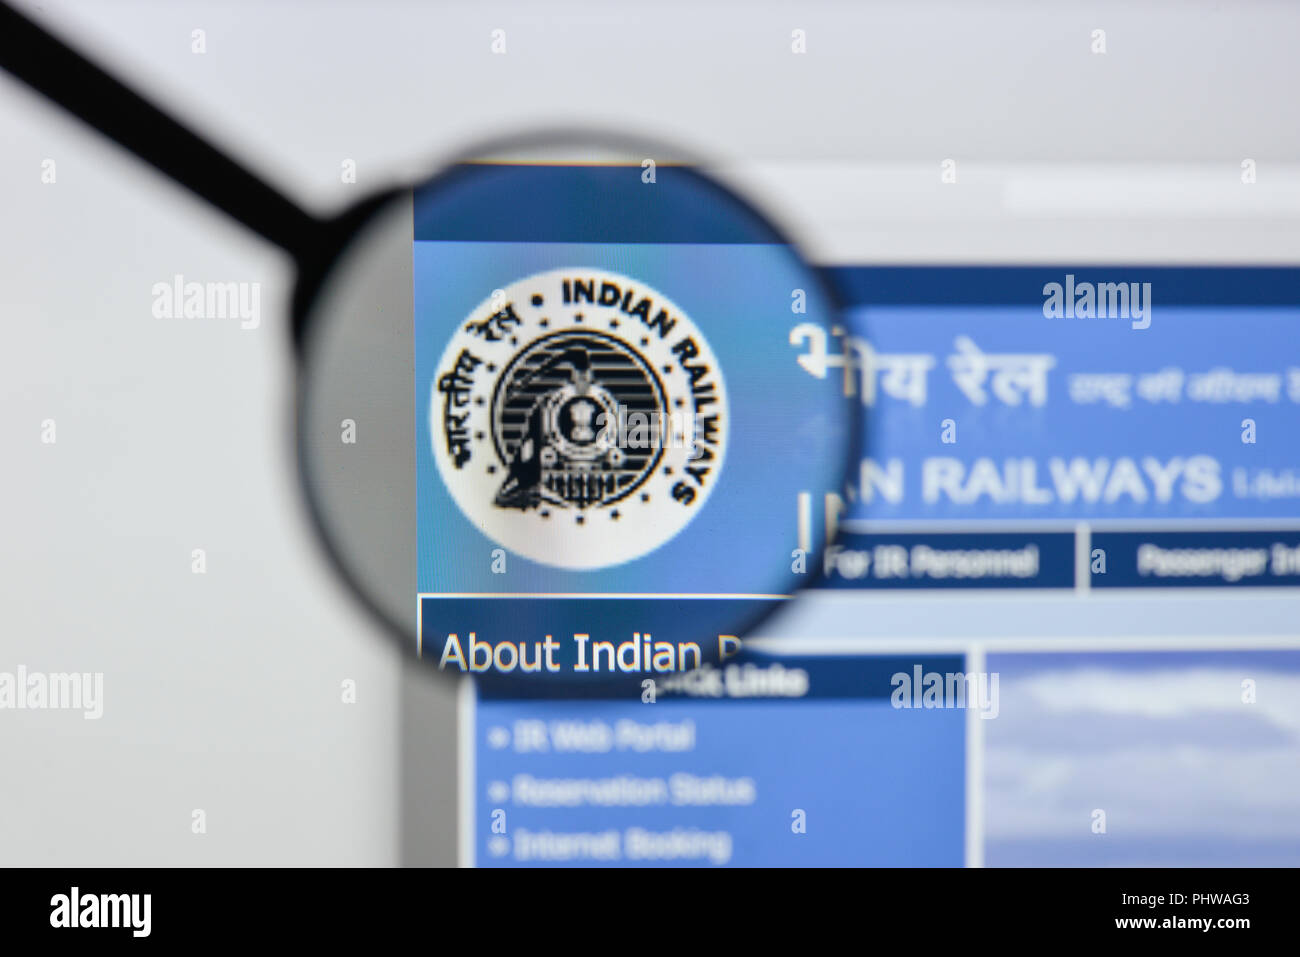 Milan, Italy - August 20, 2018: India Railways website homepage. India Railways logo visible. Stock Photo